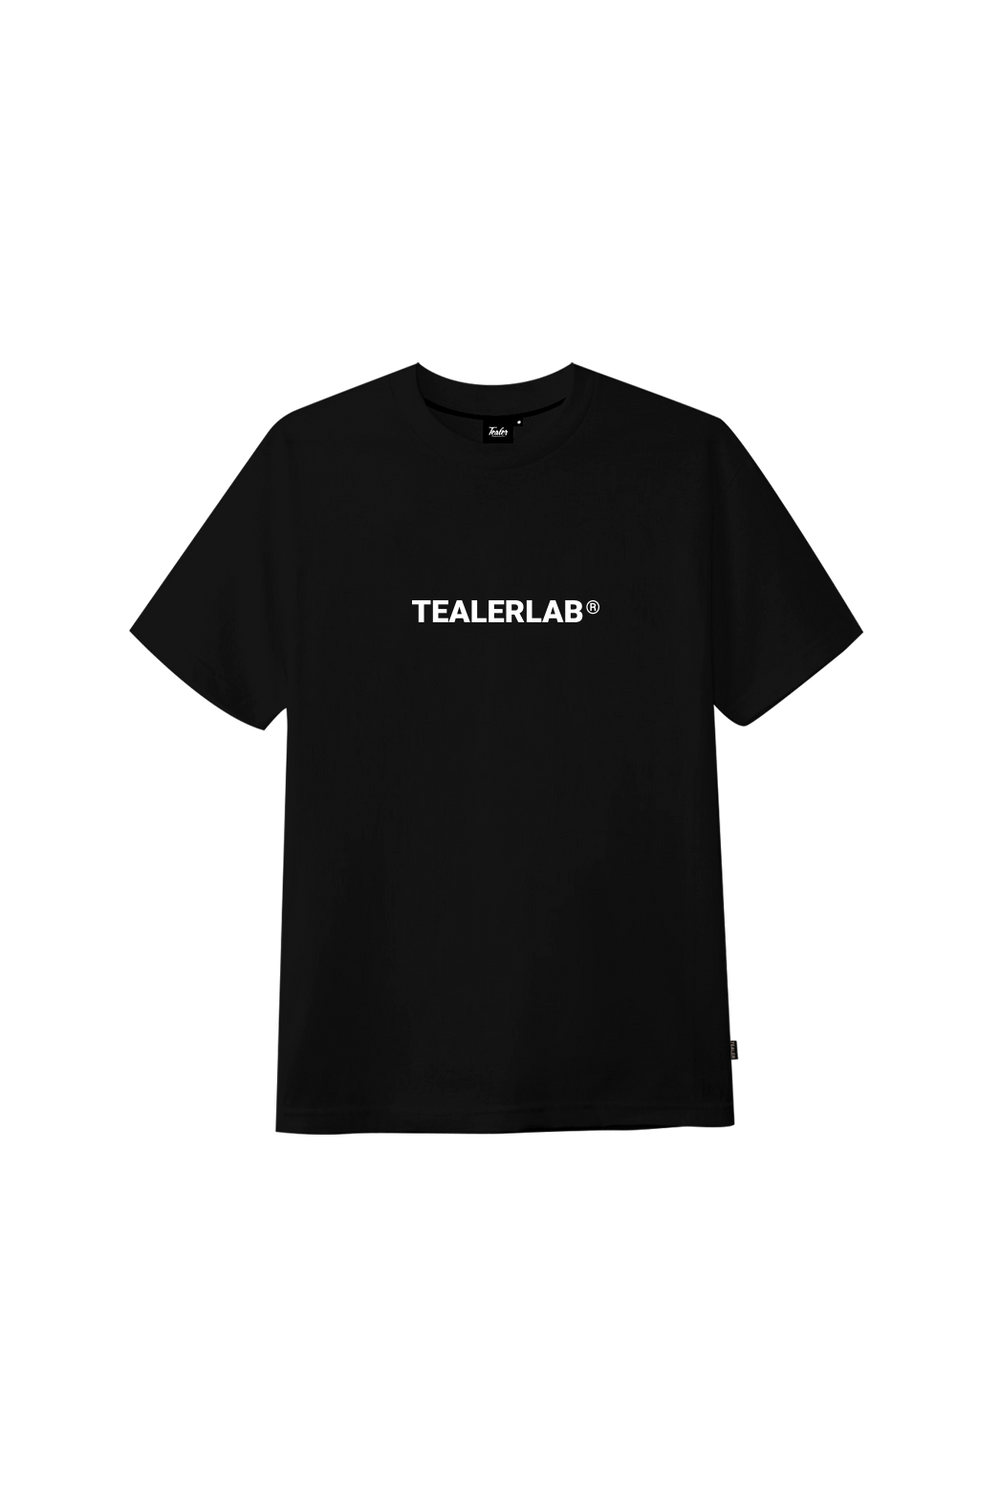 Tealerlab tealer lab logo basic, Tee Black